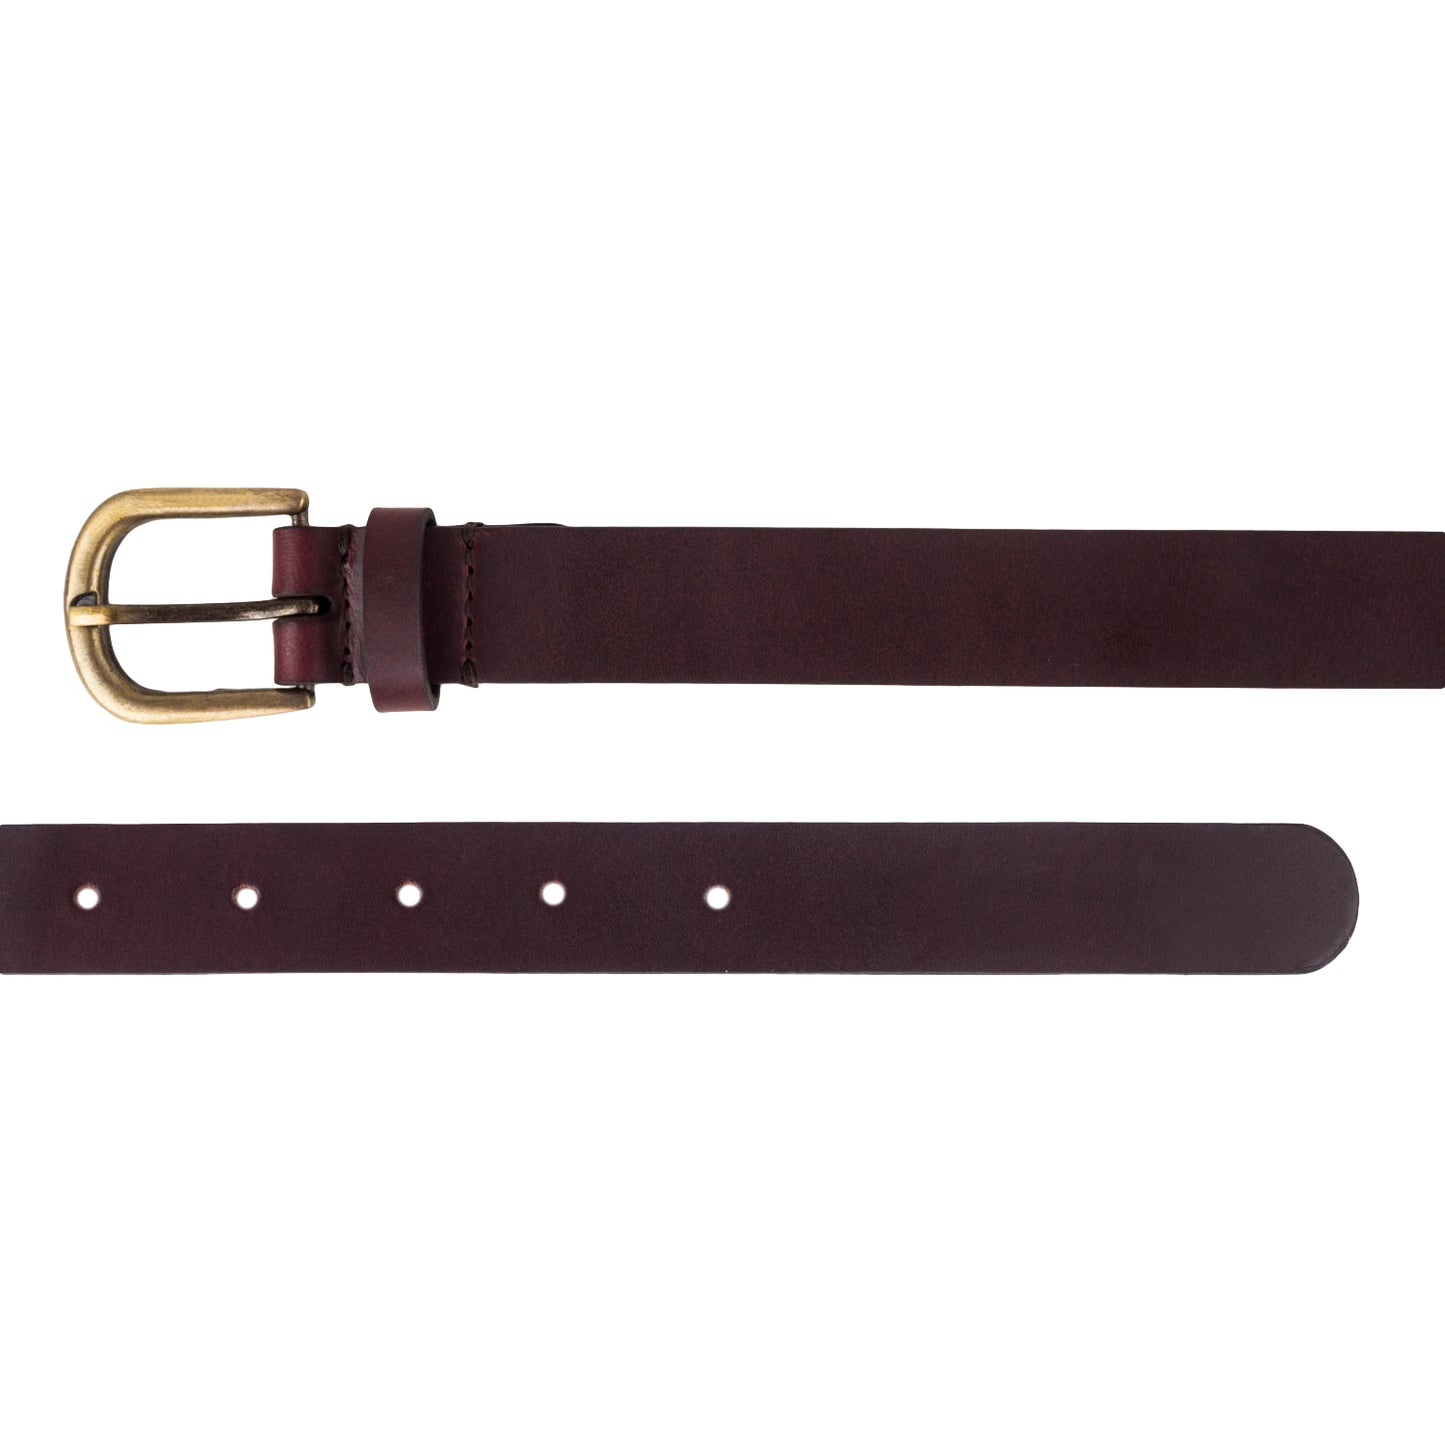 Genuine leather bordo belt